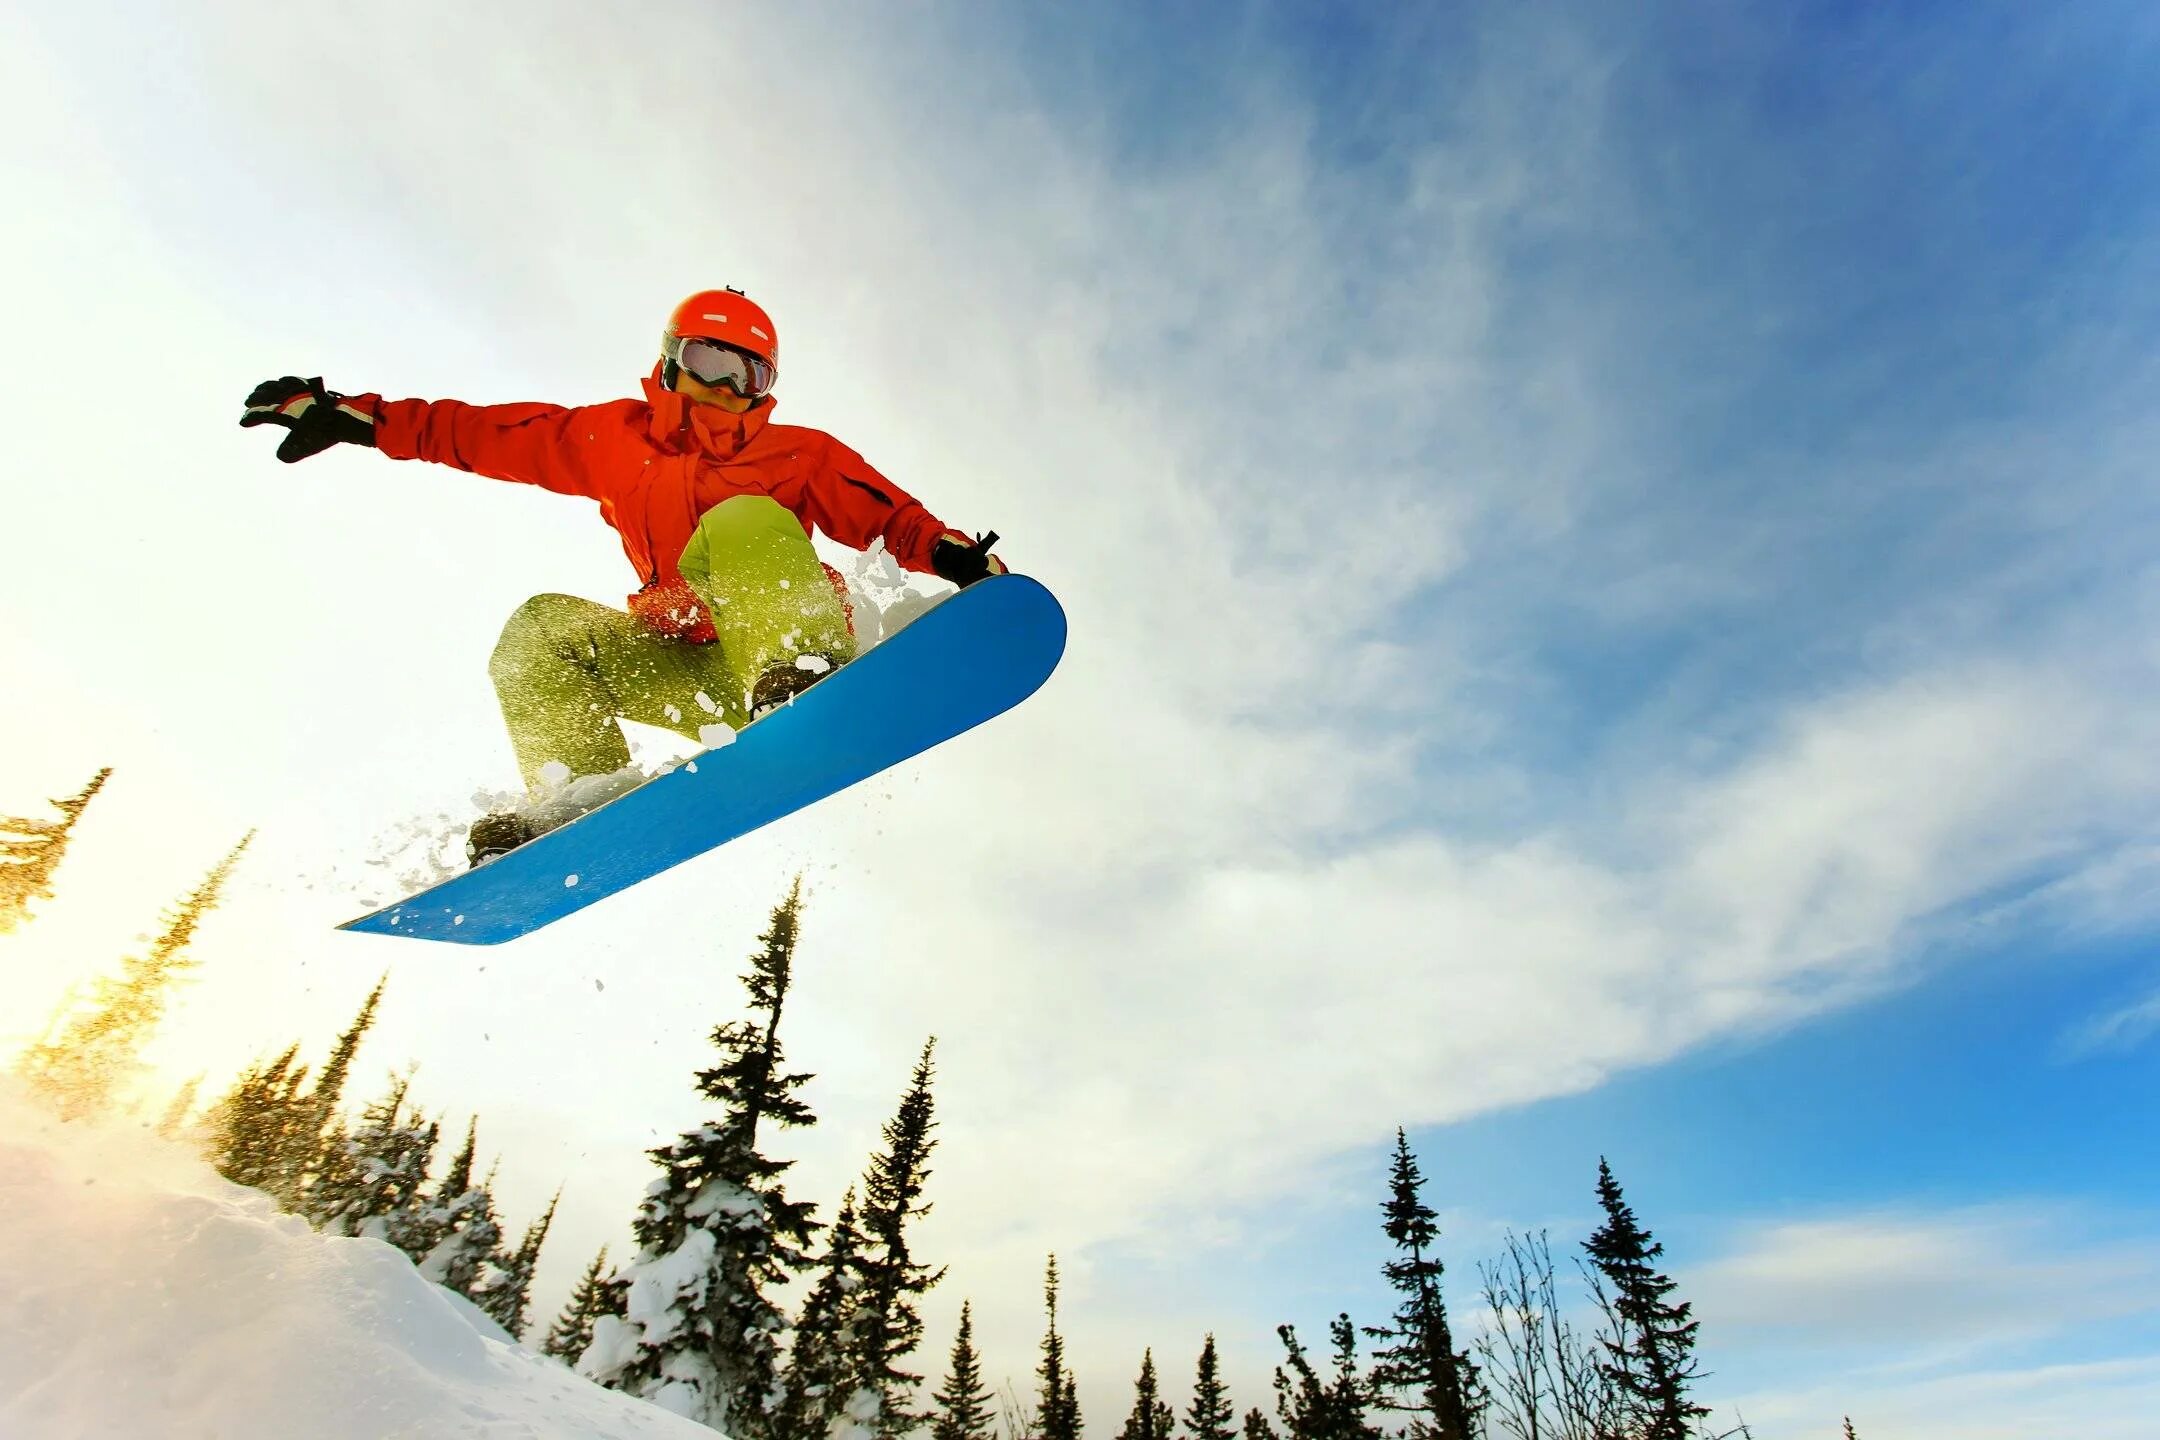 Фристайл сноуборд катания. Трэвис Райс сноубордист. Зимний спорт. Трюки на сноуборде. Skiing snowboarding